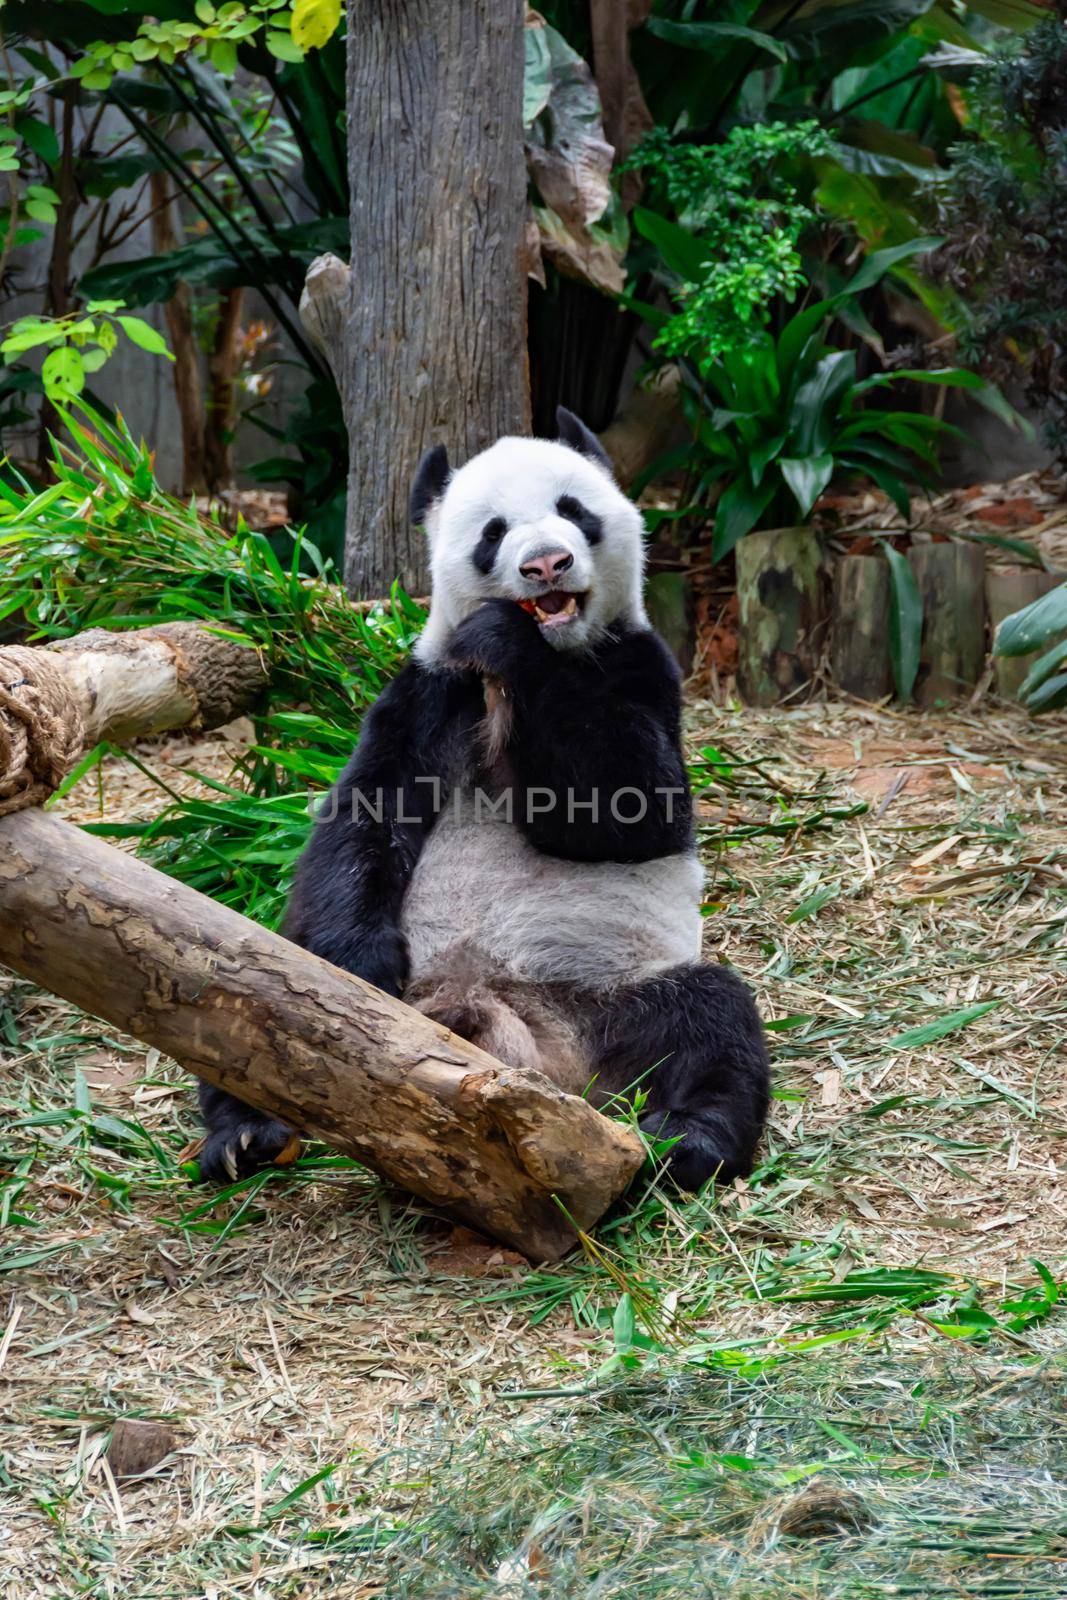 A cute panda bear while eating bamboo inside a zoo